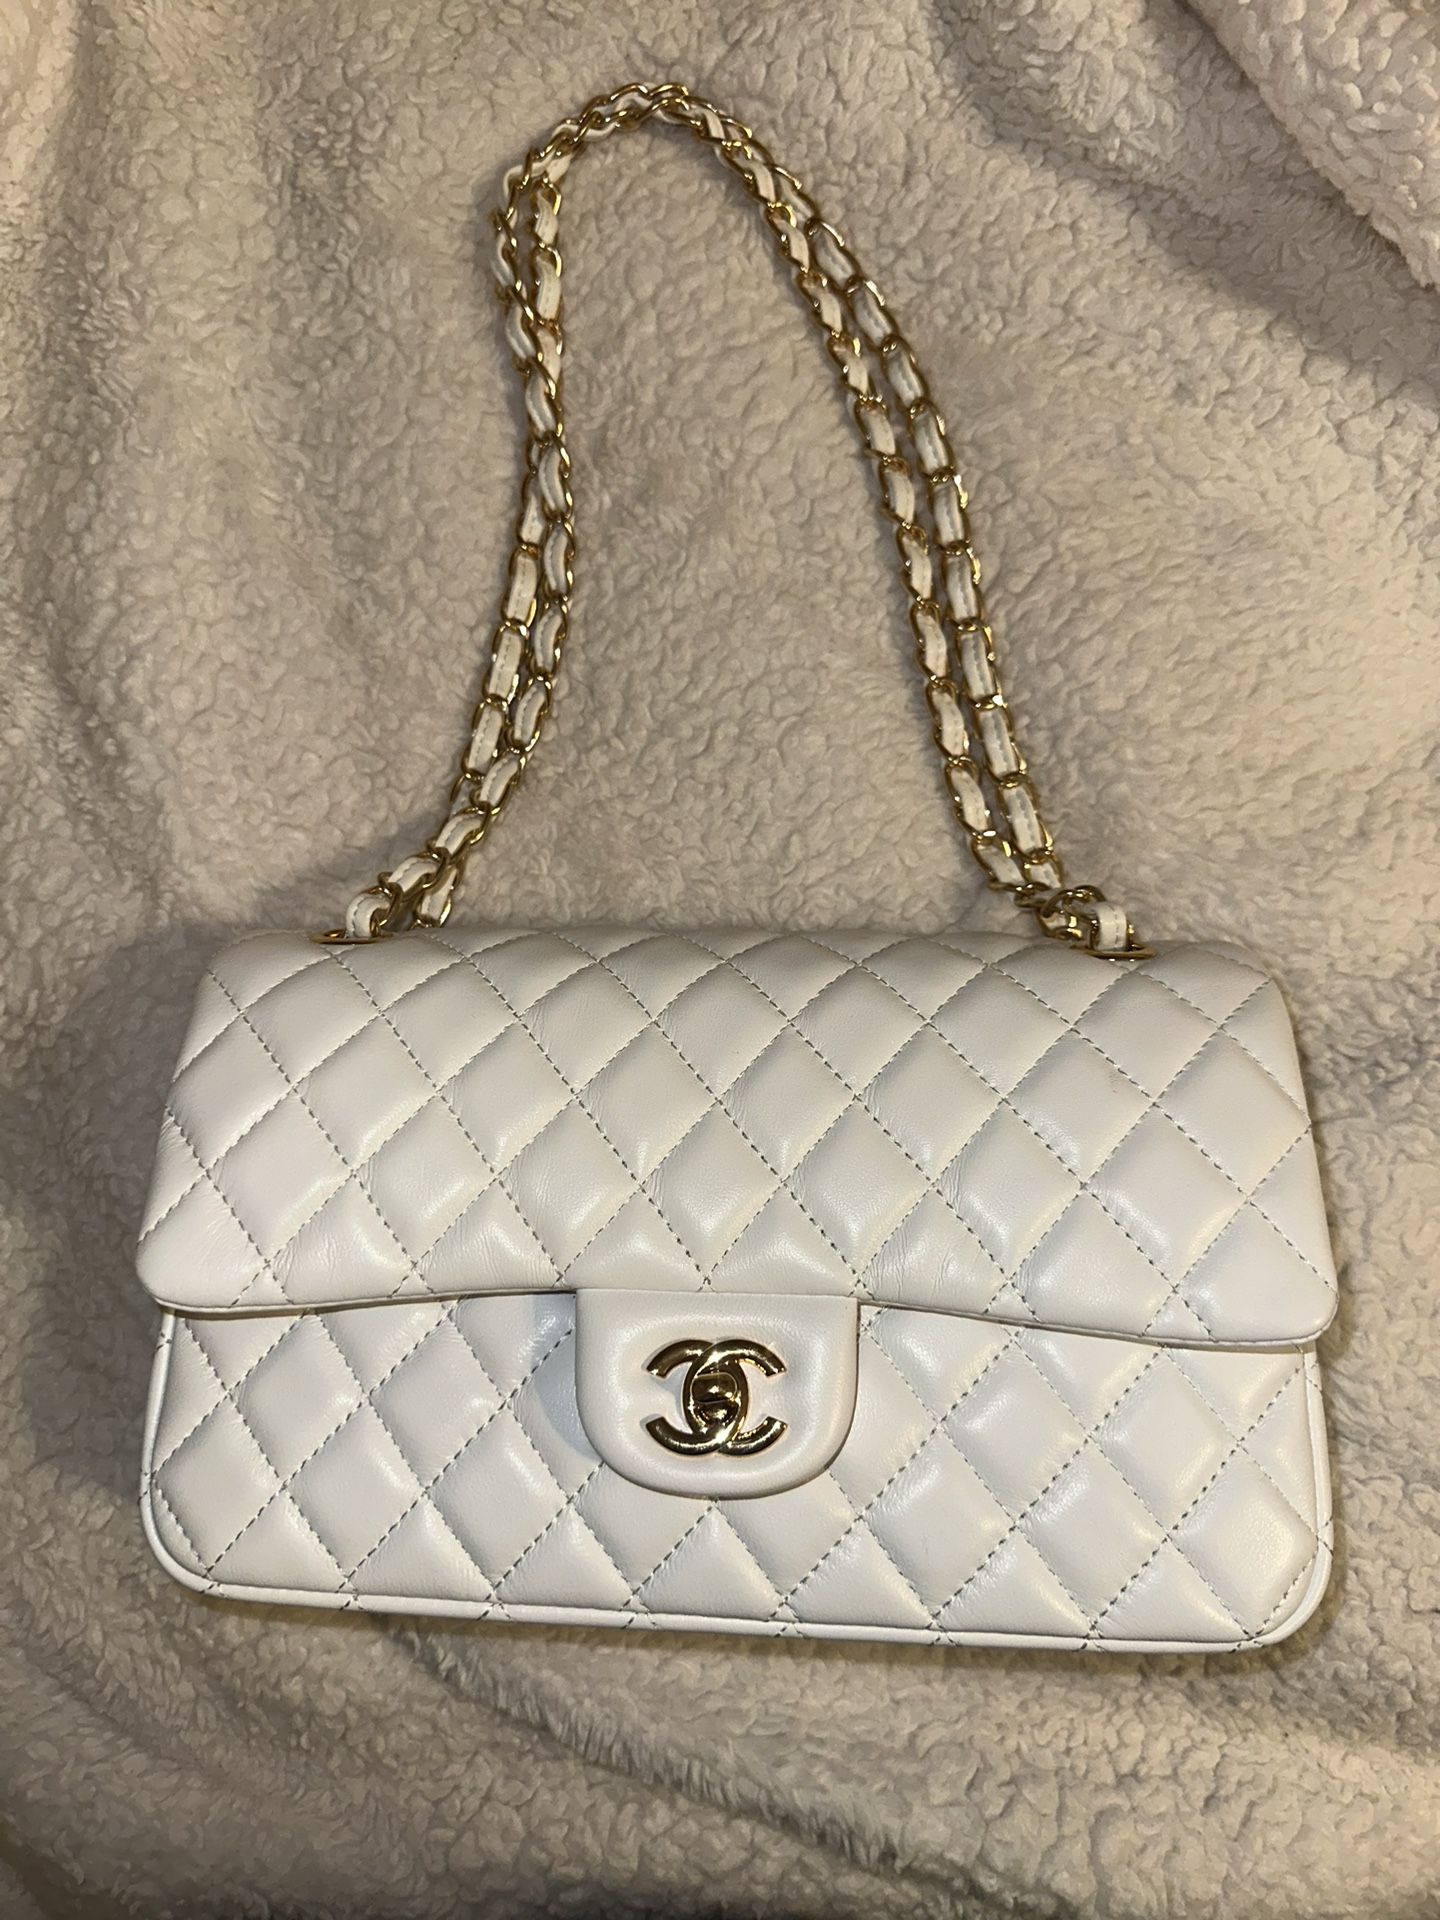 Chanel White Bag 